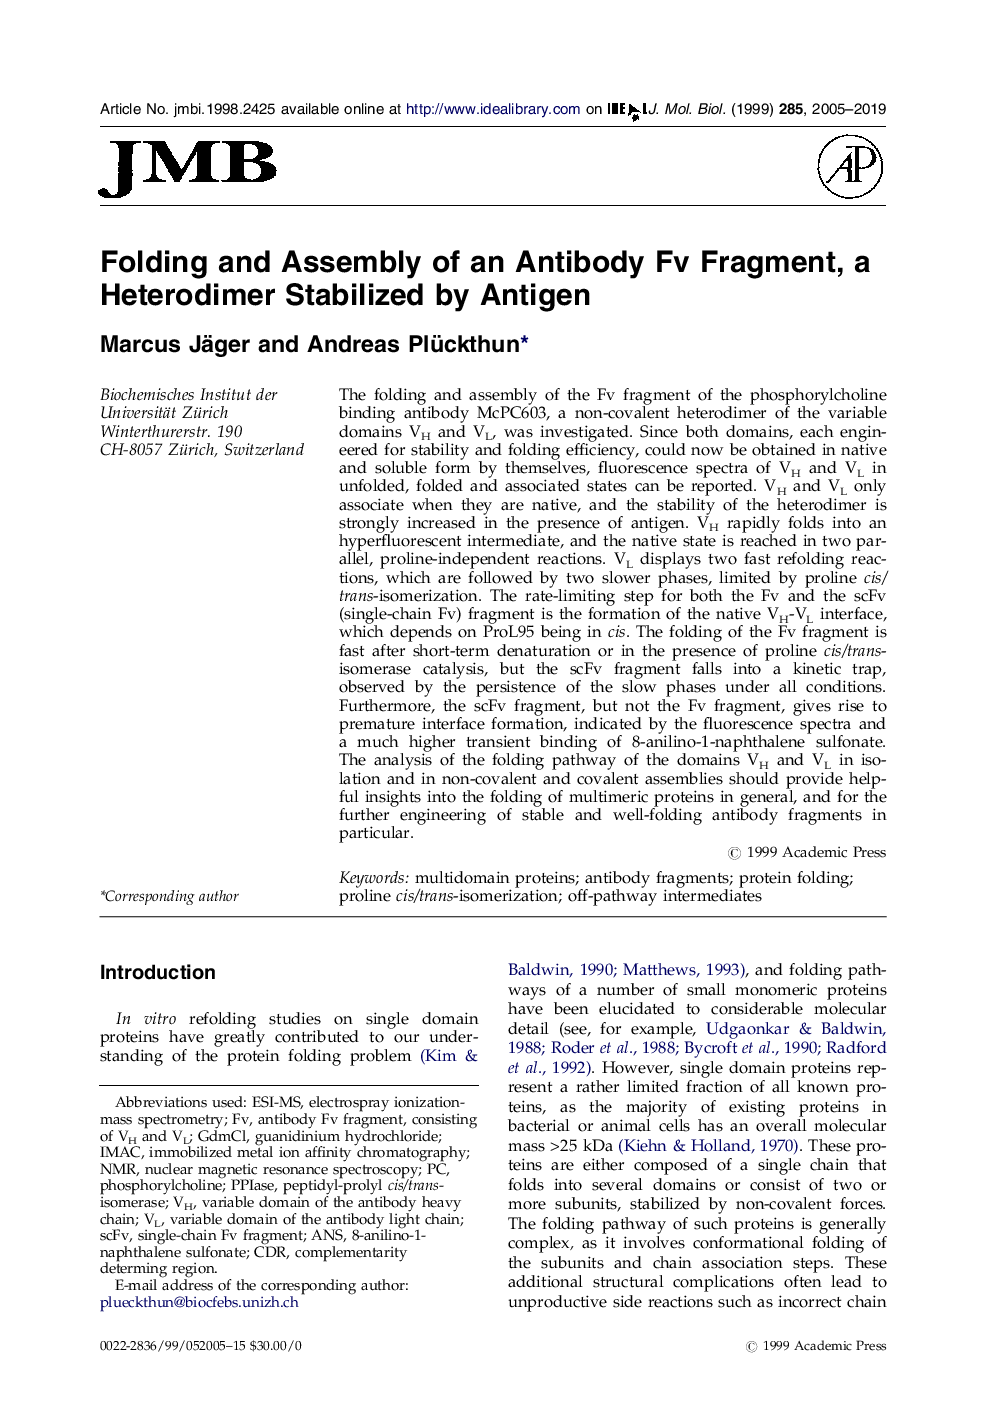 Folding and assembly of an antibody Fv fragment, a heterodimer stabilized by antigen1